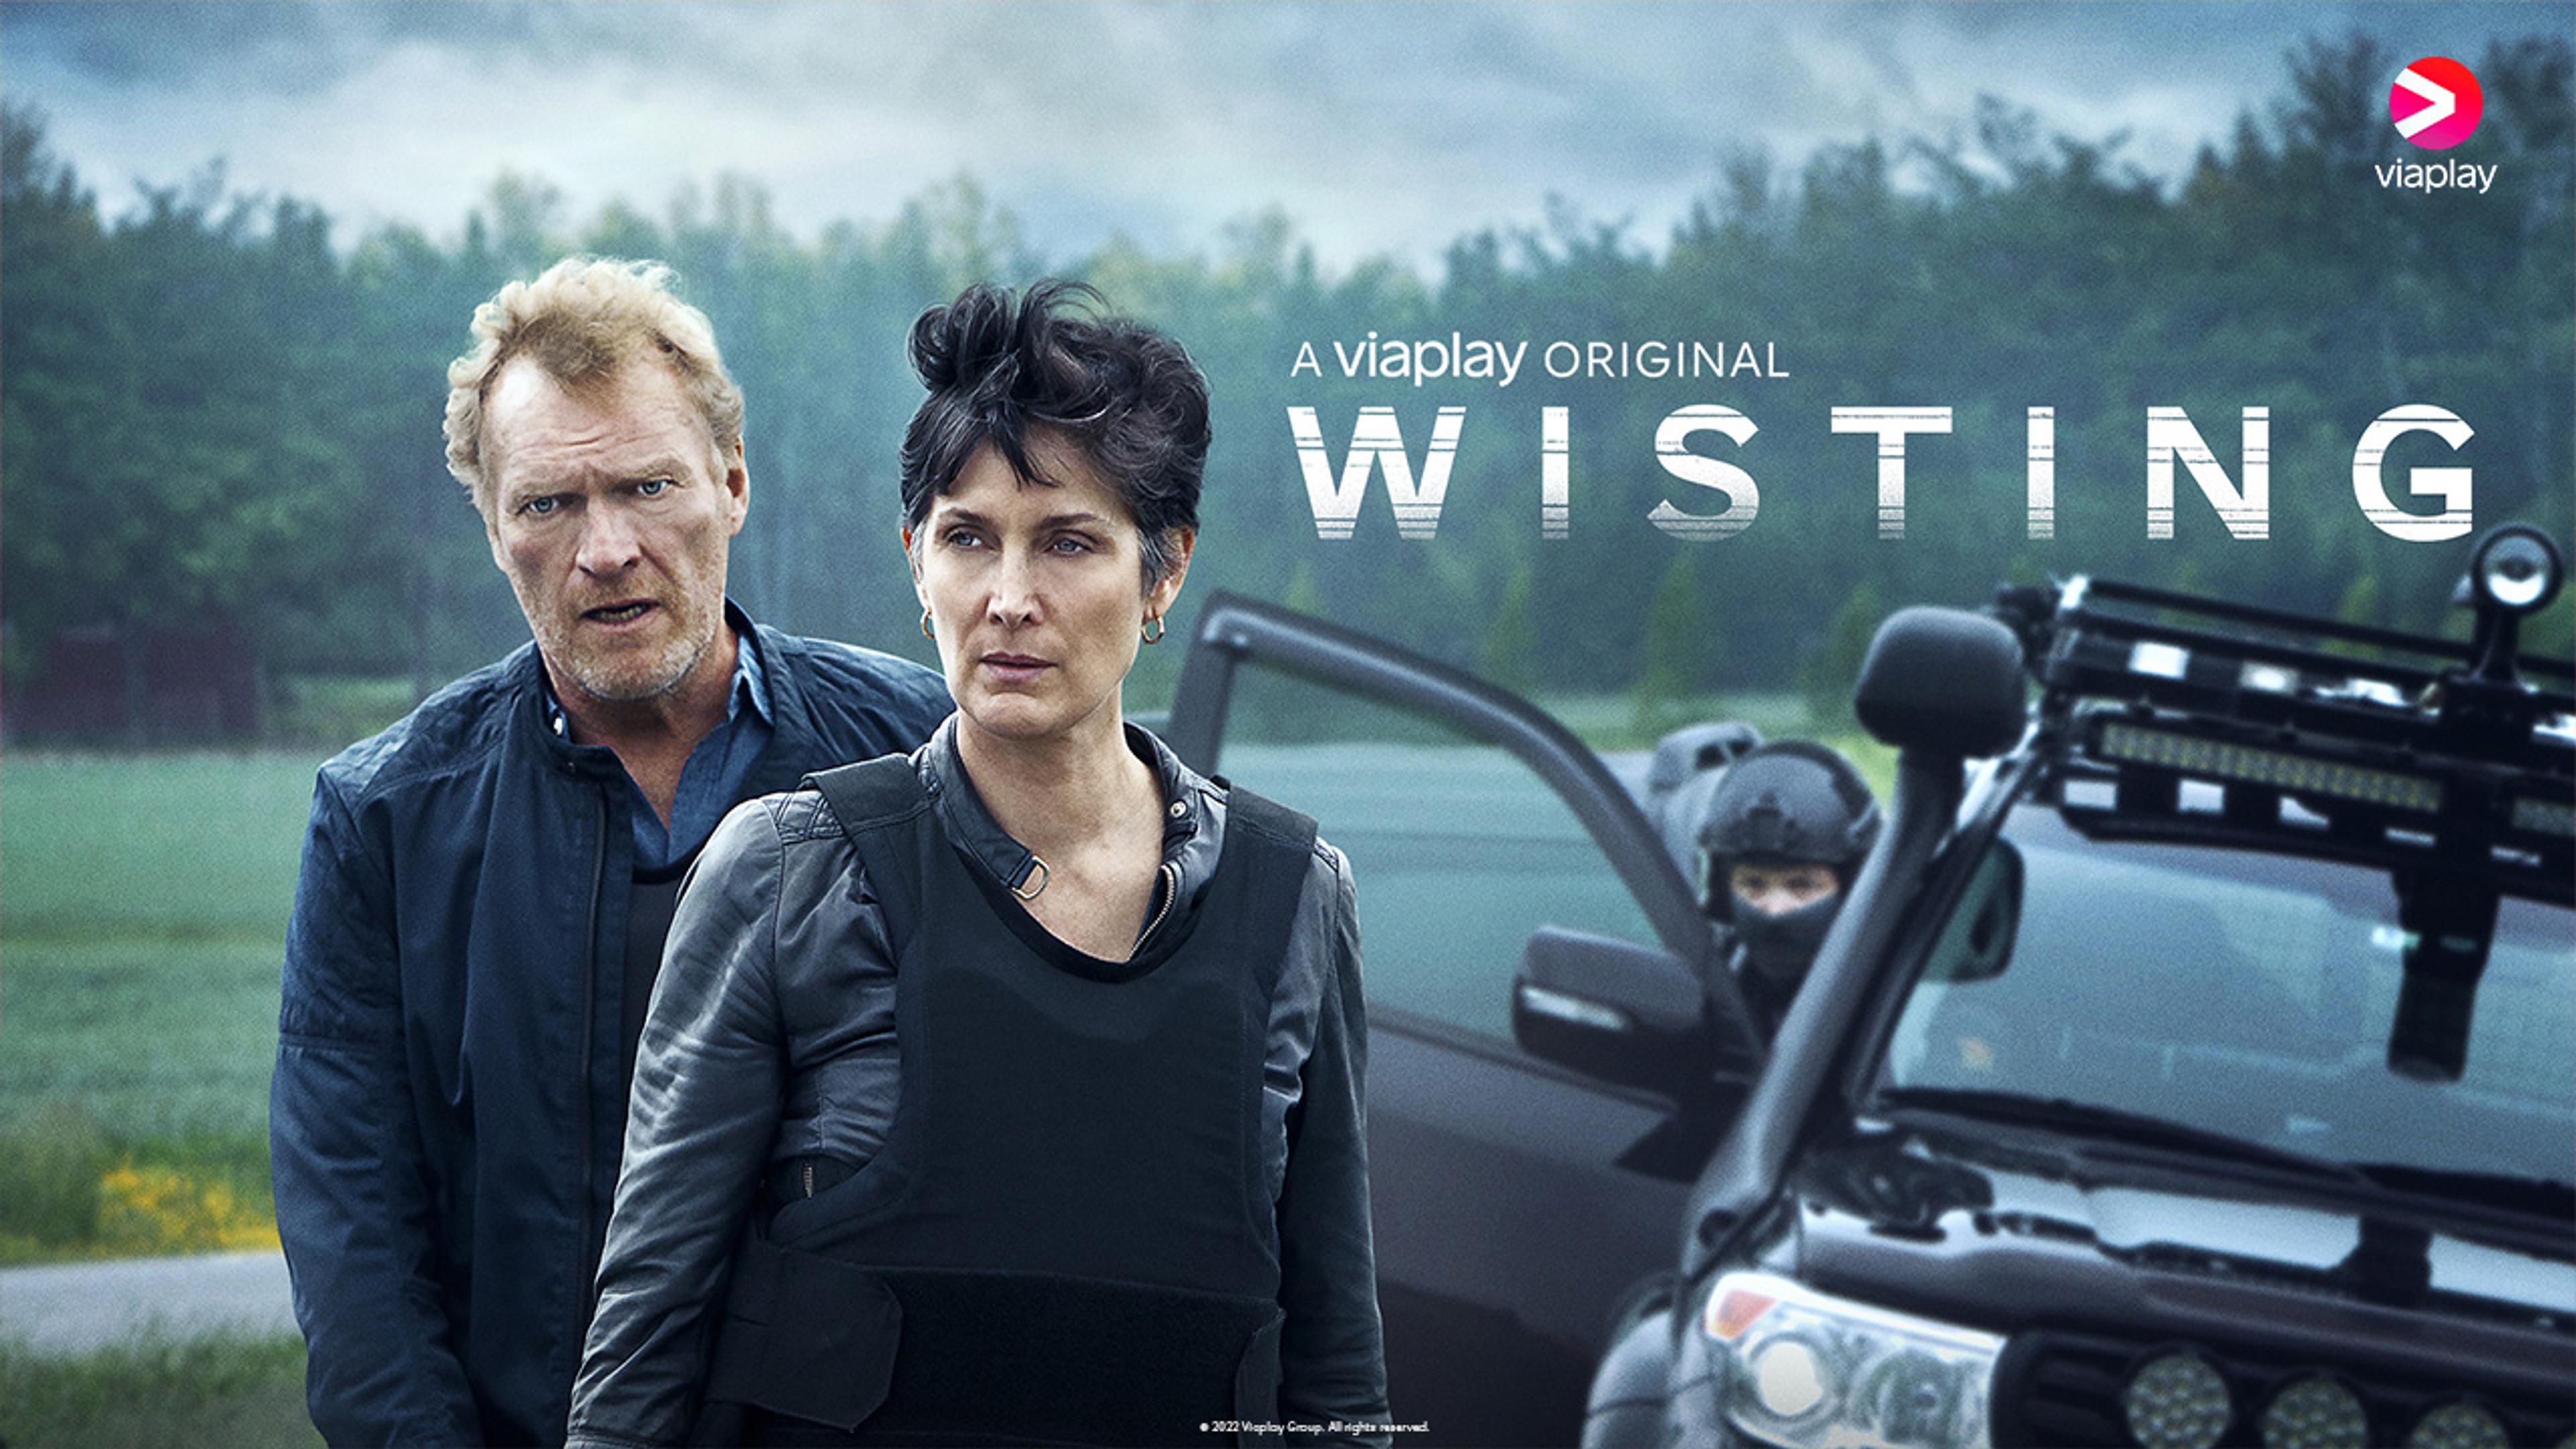 Hovedpersonene Sven Nordin og Carrie-Anne Moss står i skuddsikre vester foran en bil